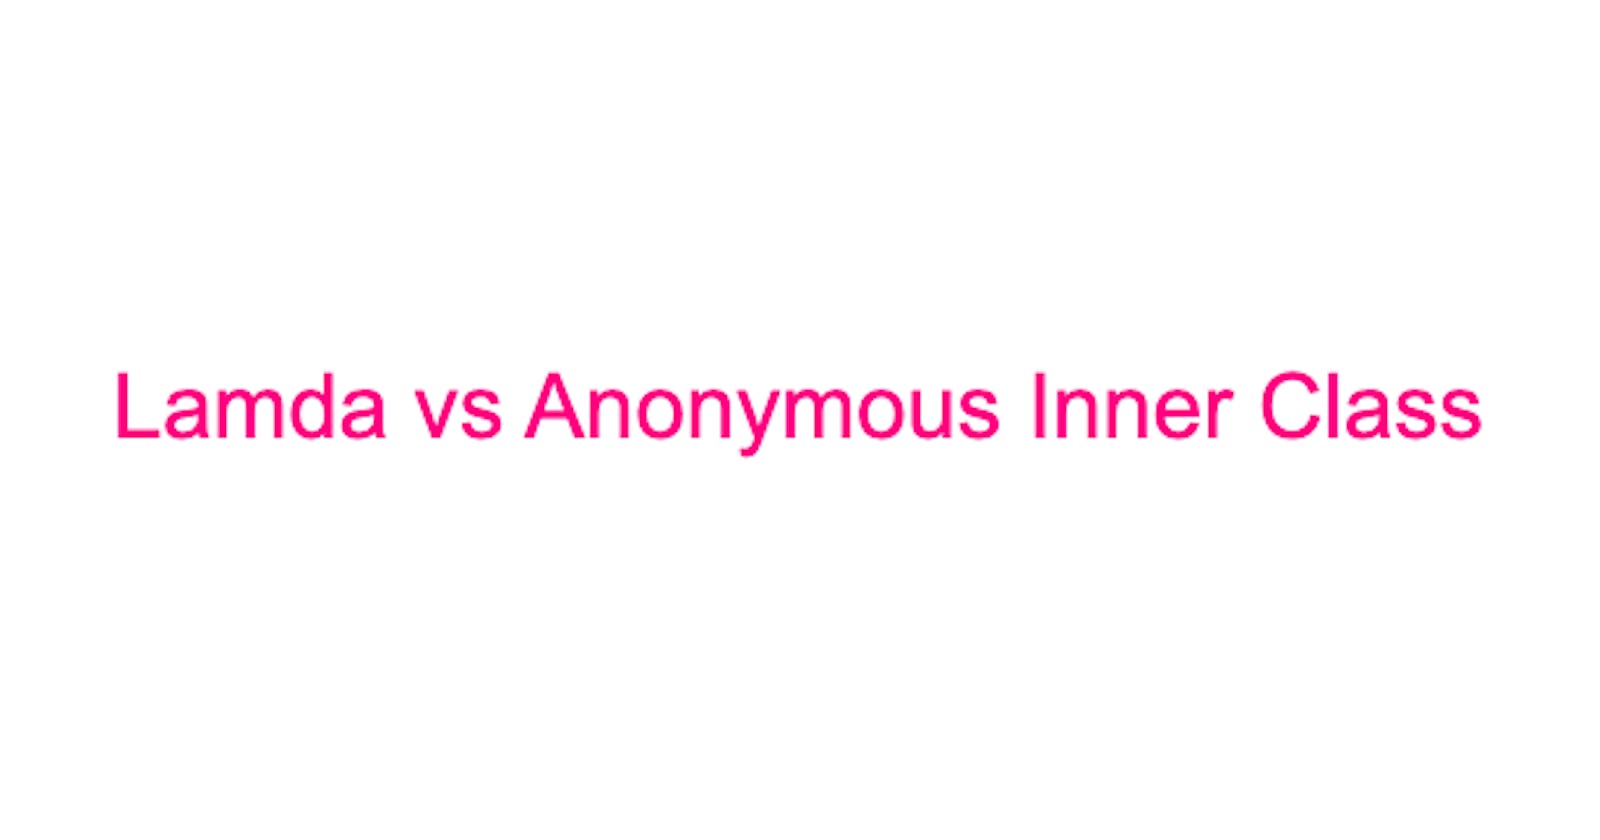 Lamda vs Anonymous Inner Class in Java